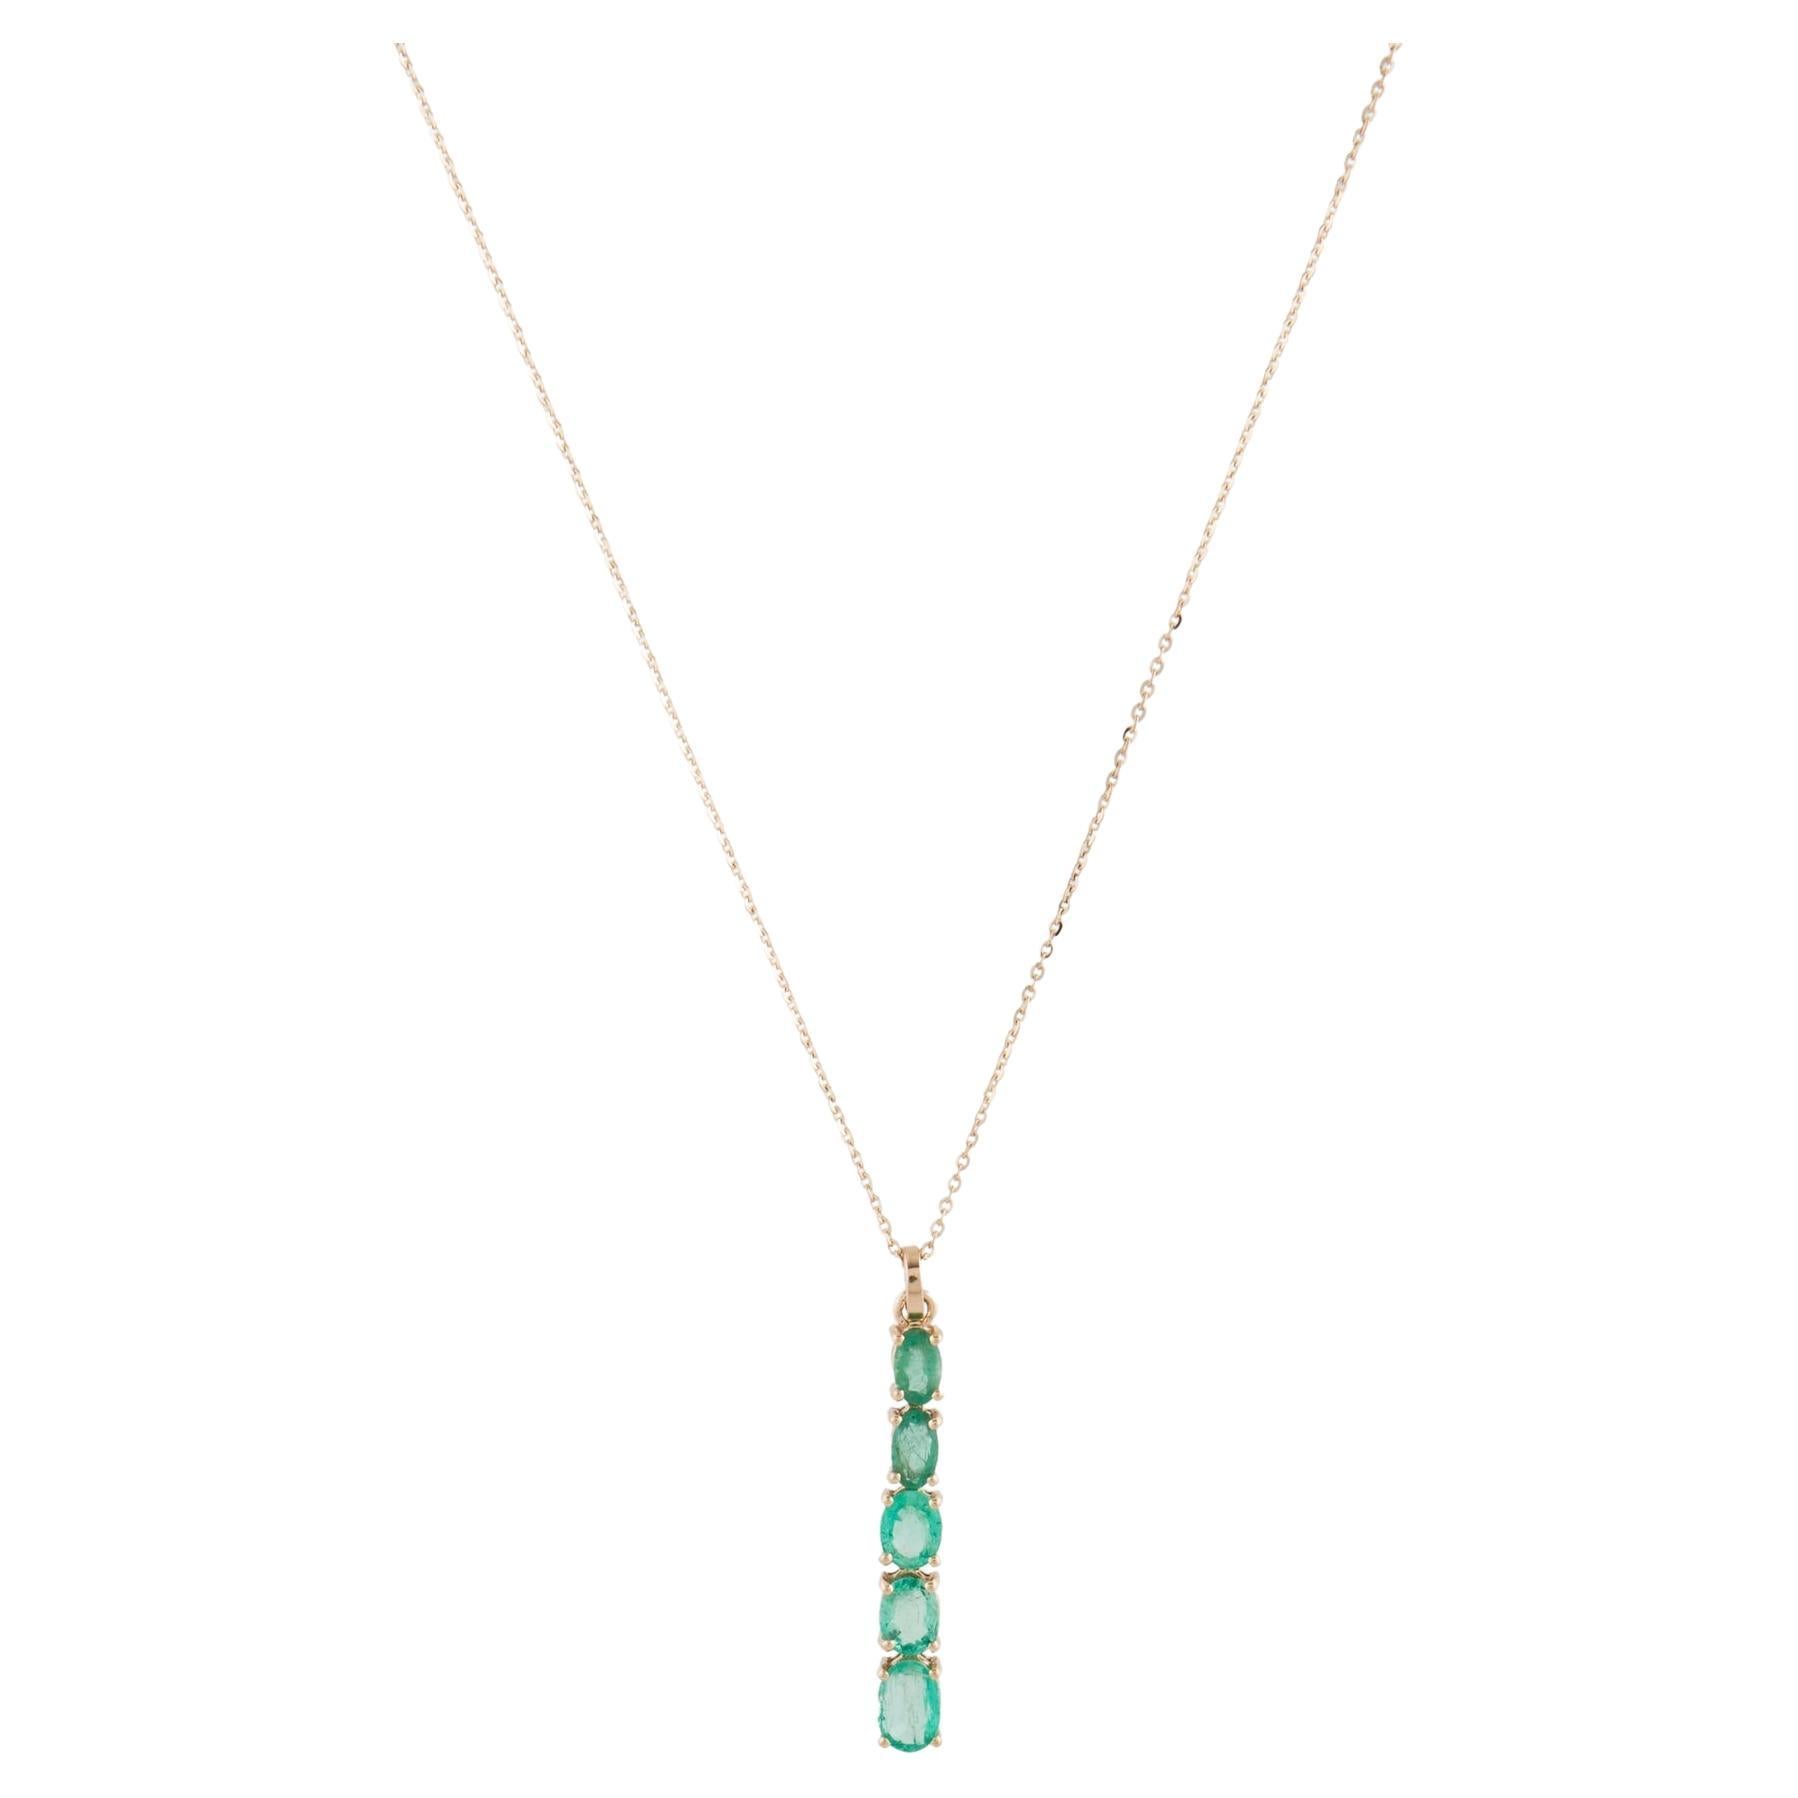 14K 1.44ctw Emerald Pendant Necklace: Elegant Luxury Statement Jewelry Piece For Sale